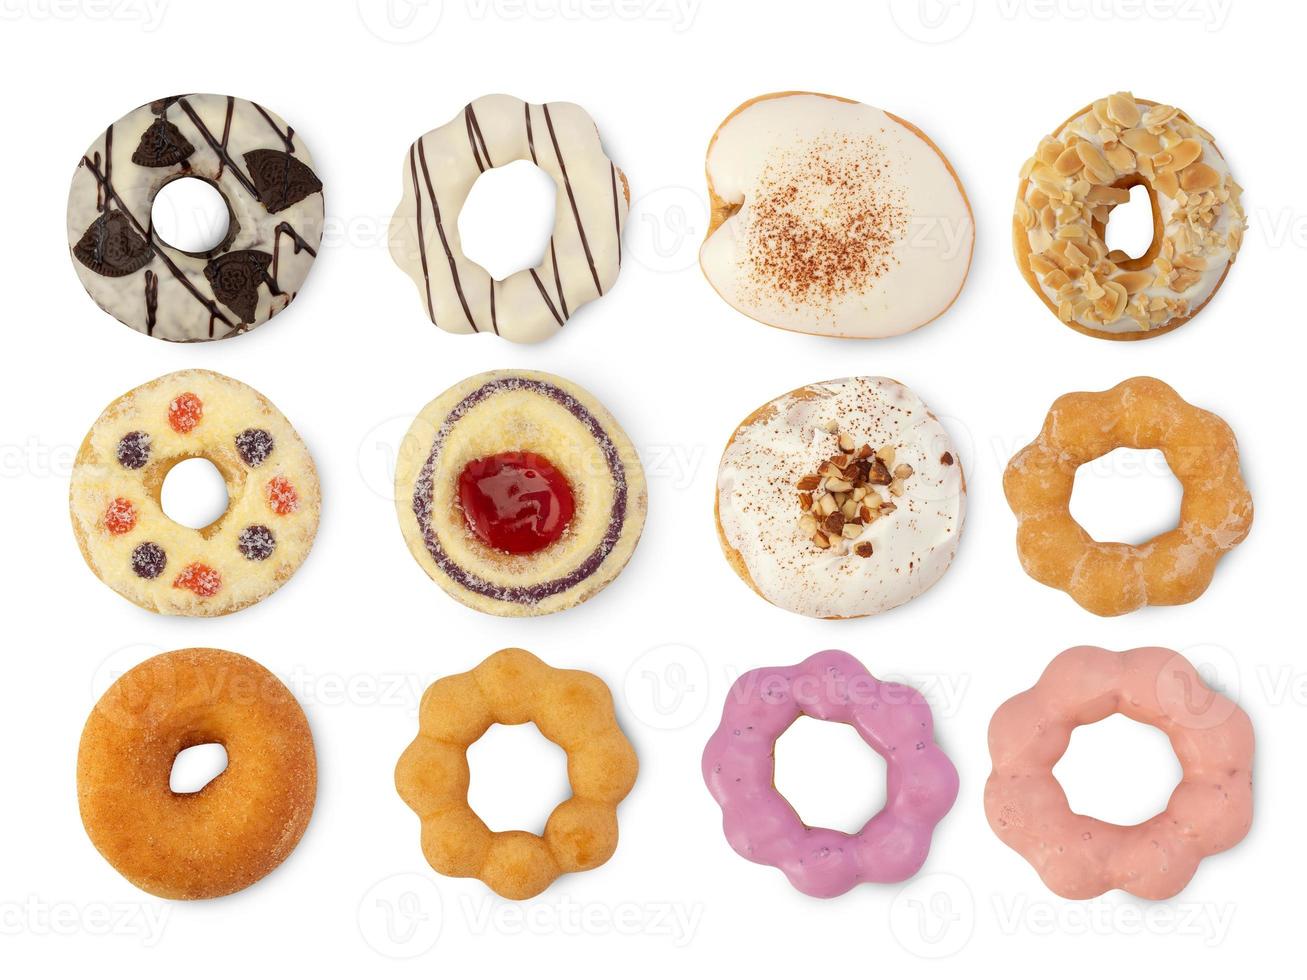 reeks van donuts geïsoleerd Aan wit achtergrond met knipsel pad foto